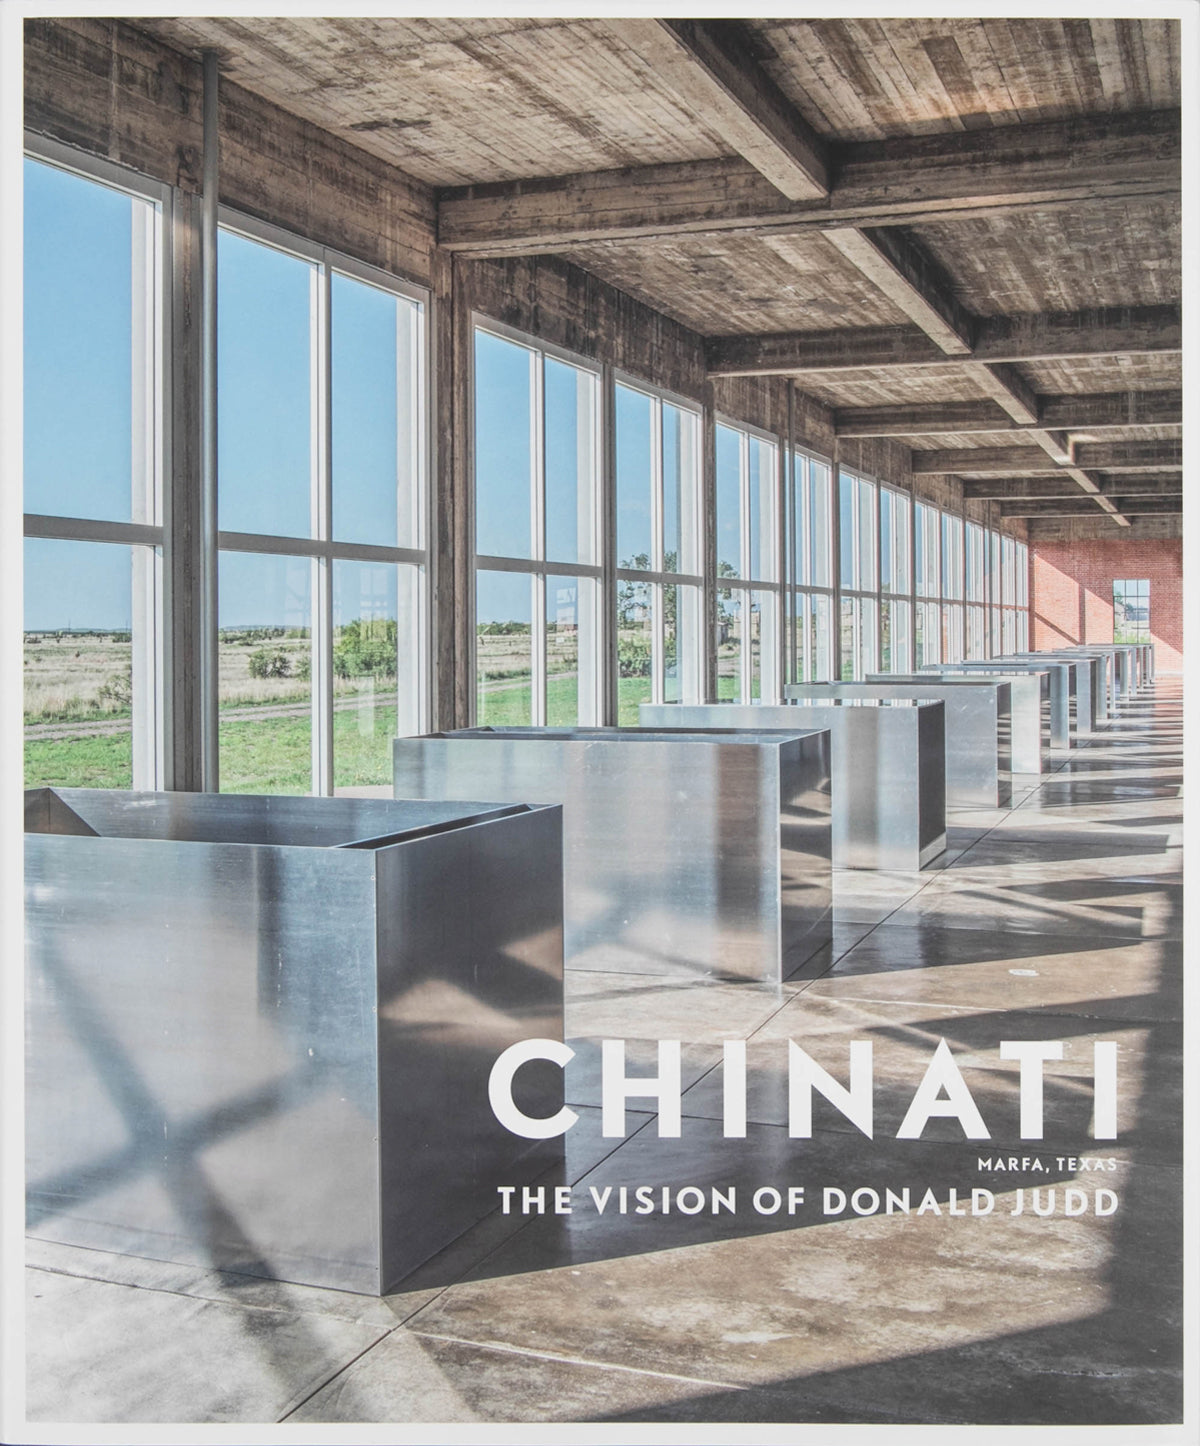 Chinati: The Vision of Donald Judd